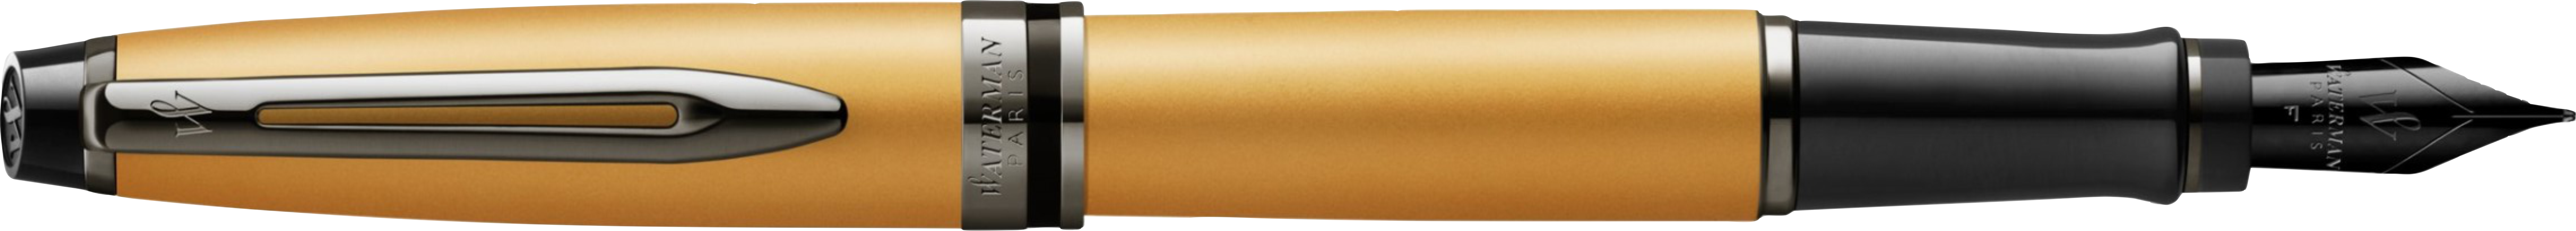 2119257 Ручка перьевая Waterman Expert Deluxe Metallic Gold RT F сталь нержавеющая